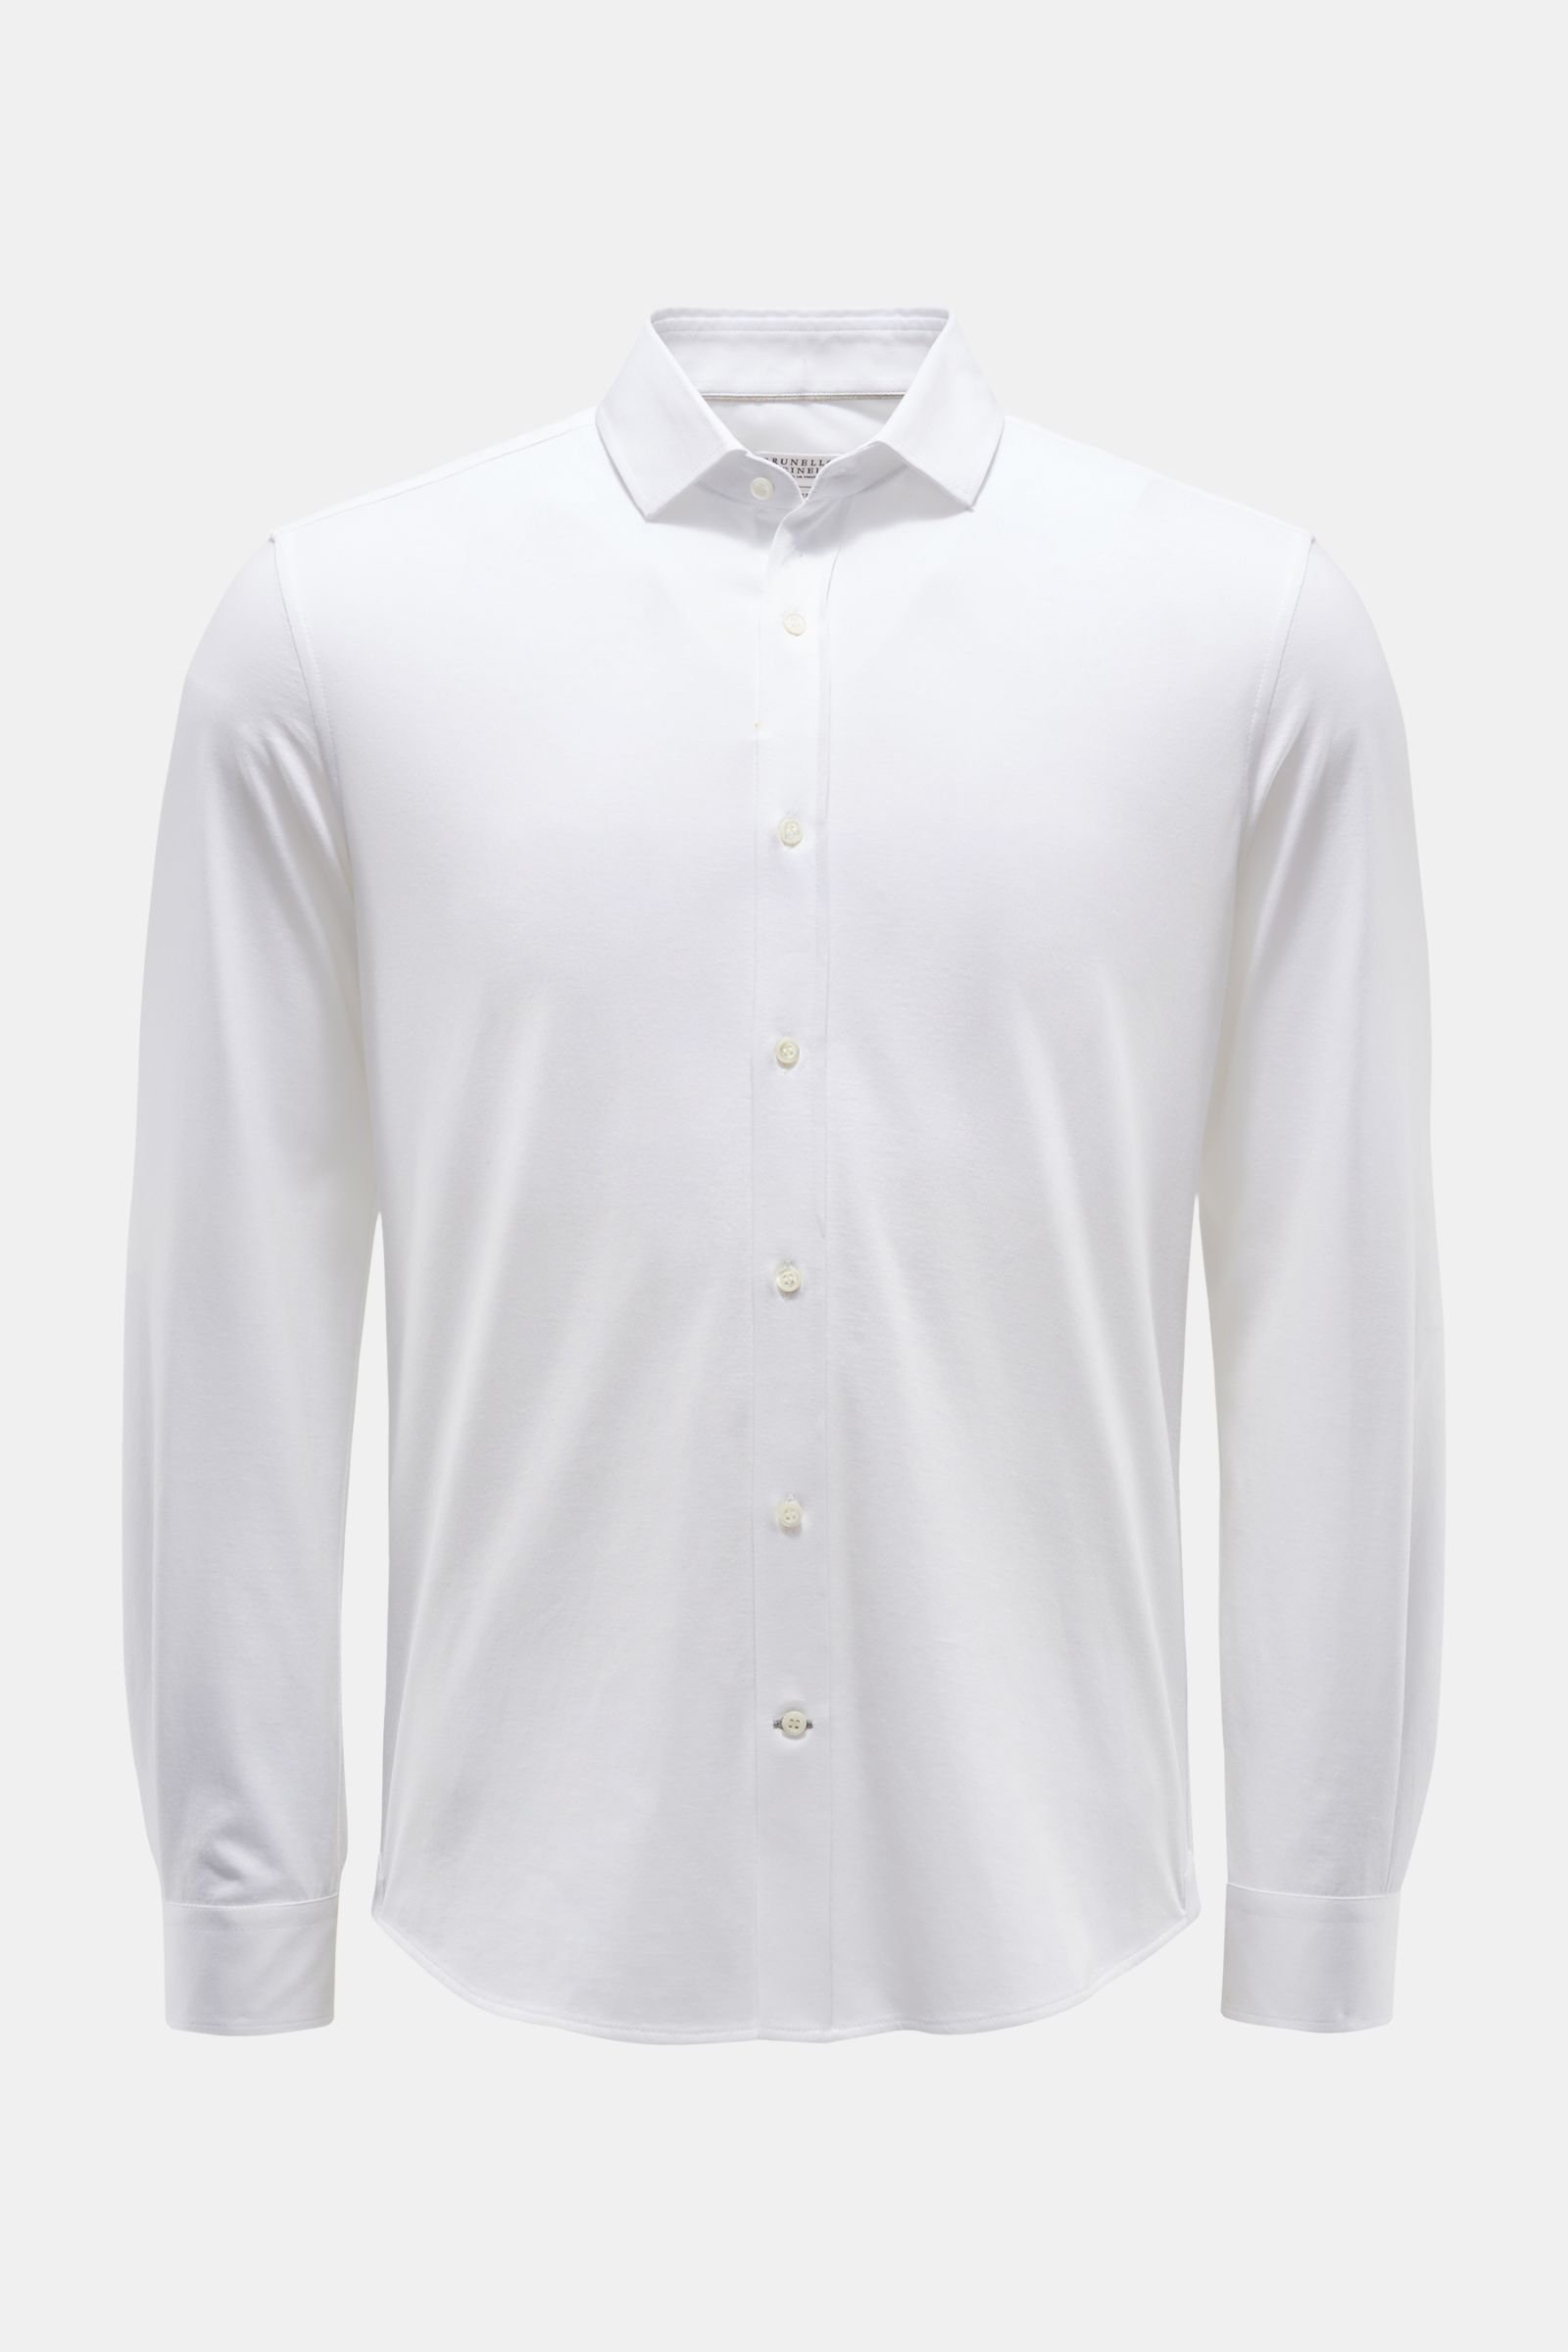 Jersey shirt 'Leisure Fit' slim collar white